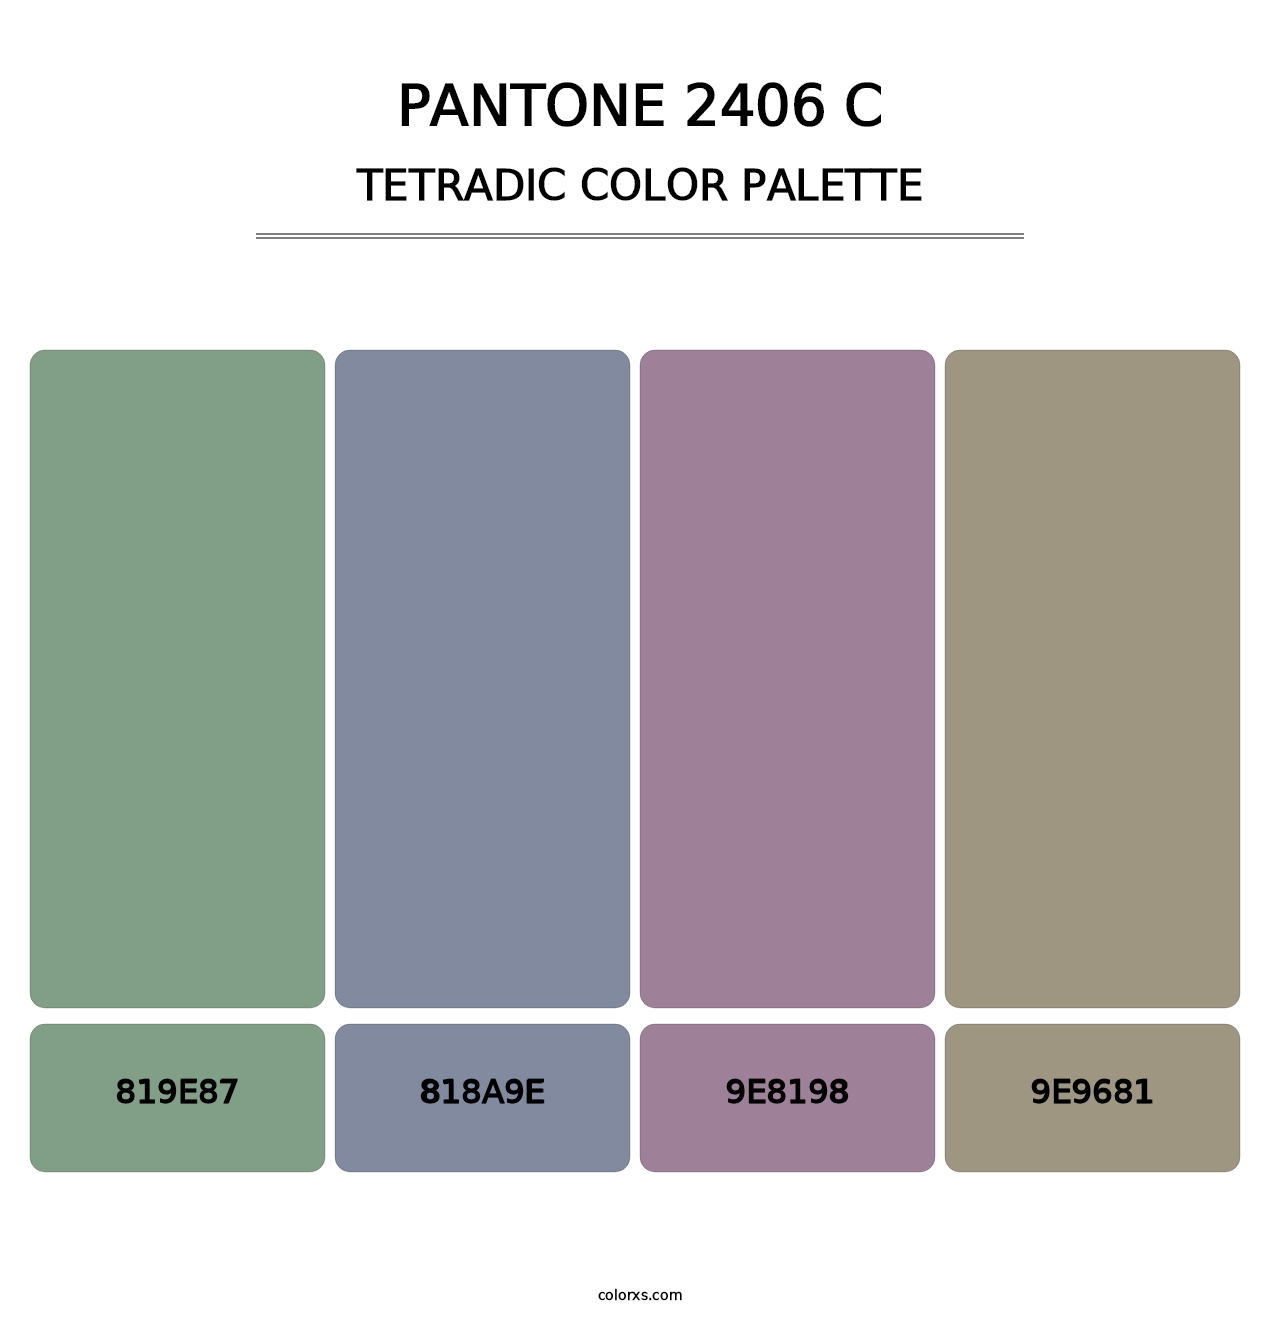 PANTONE 2406 C - Tetradic Color Palette